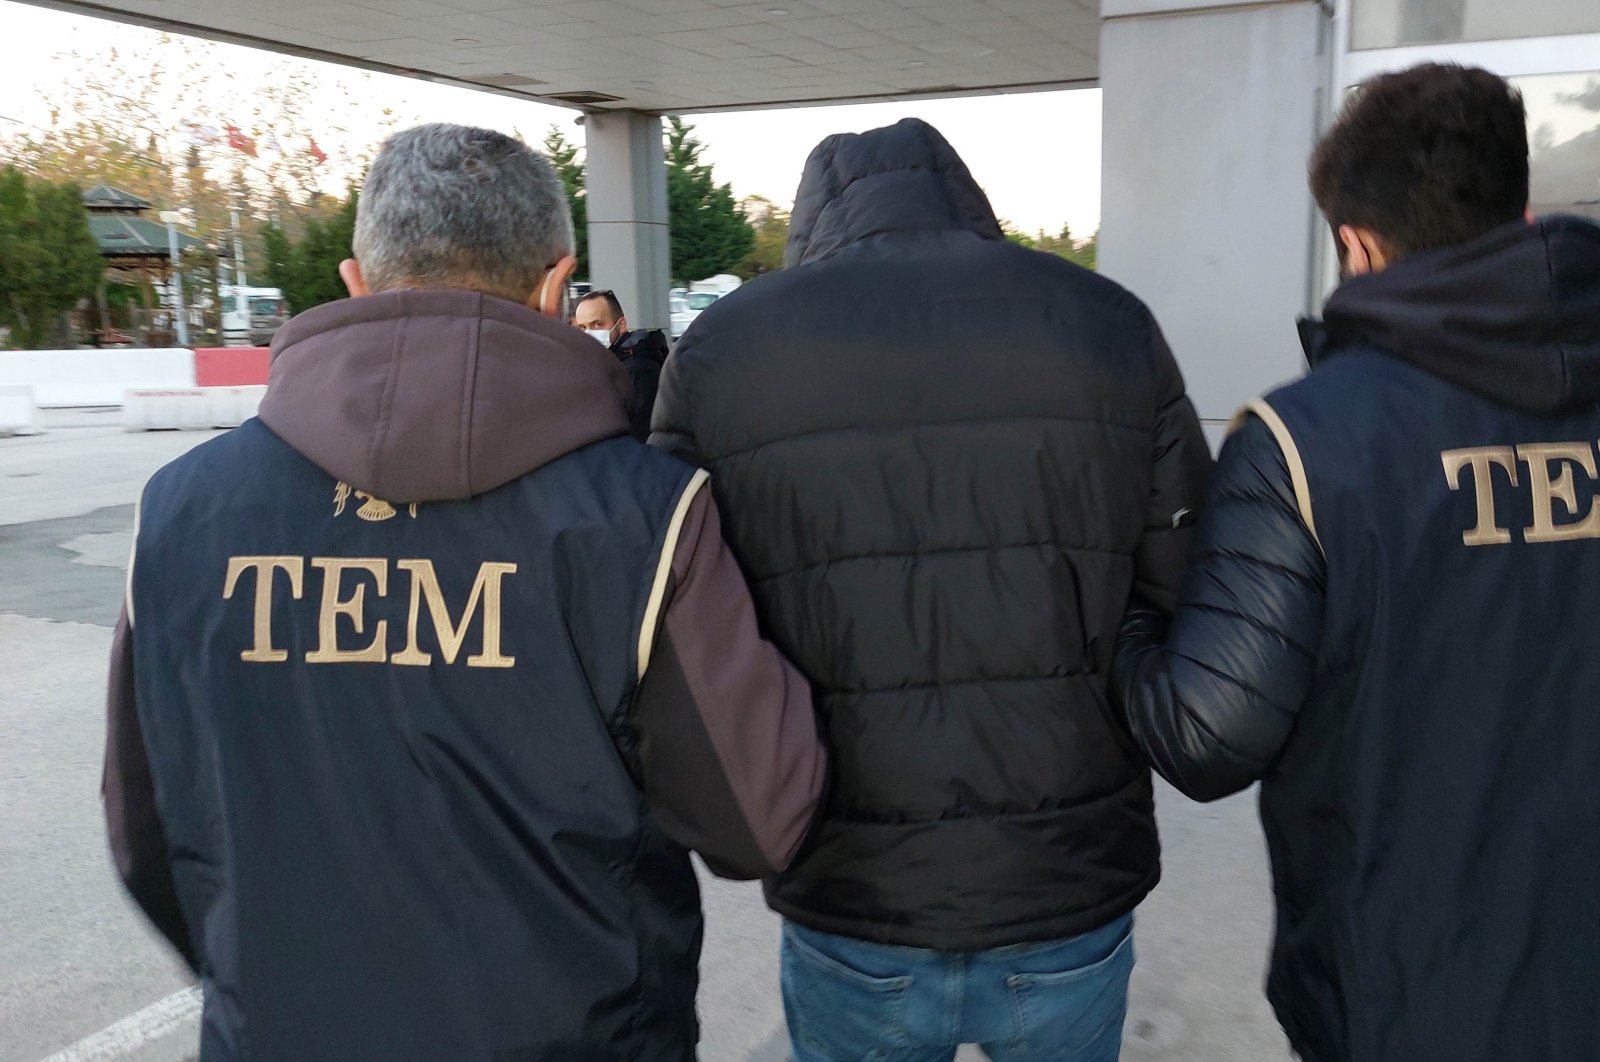 49 ditangkap, 2 dicari dalam operasi melawan FETÖ di Türkiye